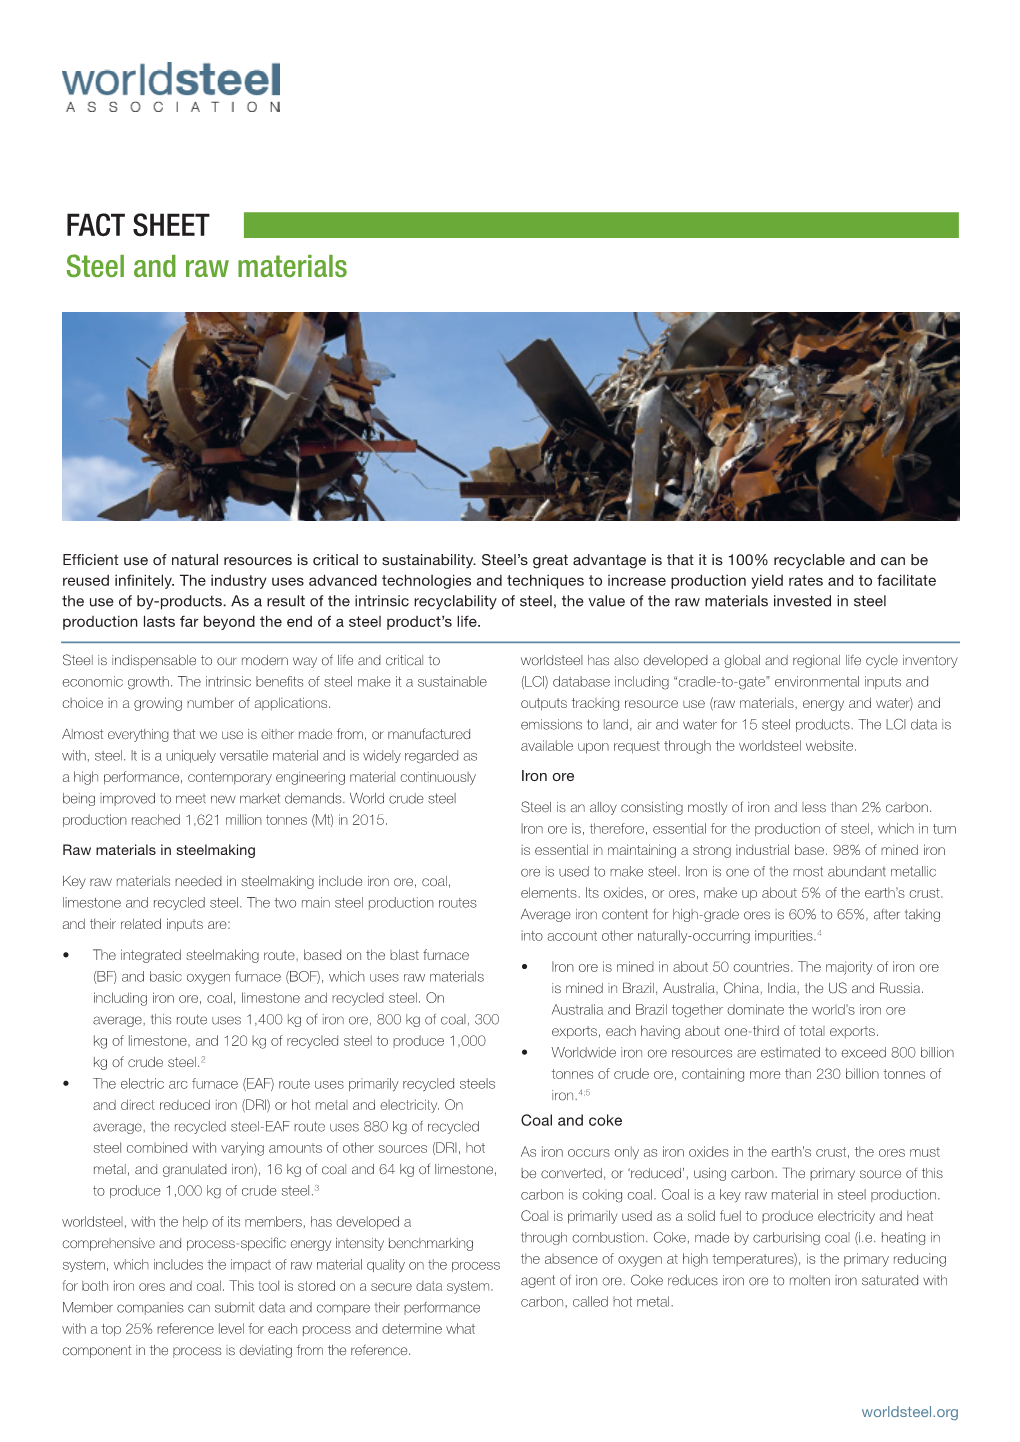 Worldsteel Association Fact Sheet – Steel and Raw Materials